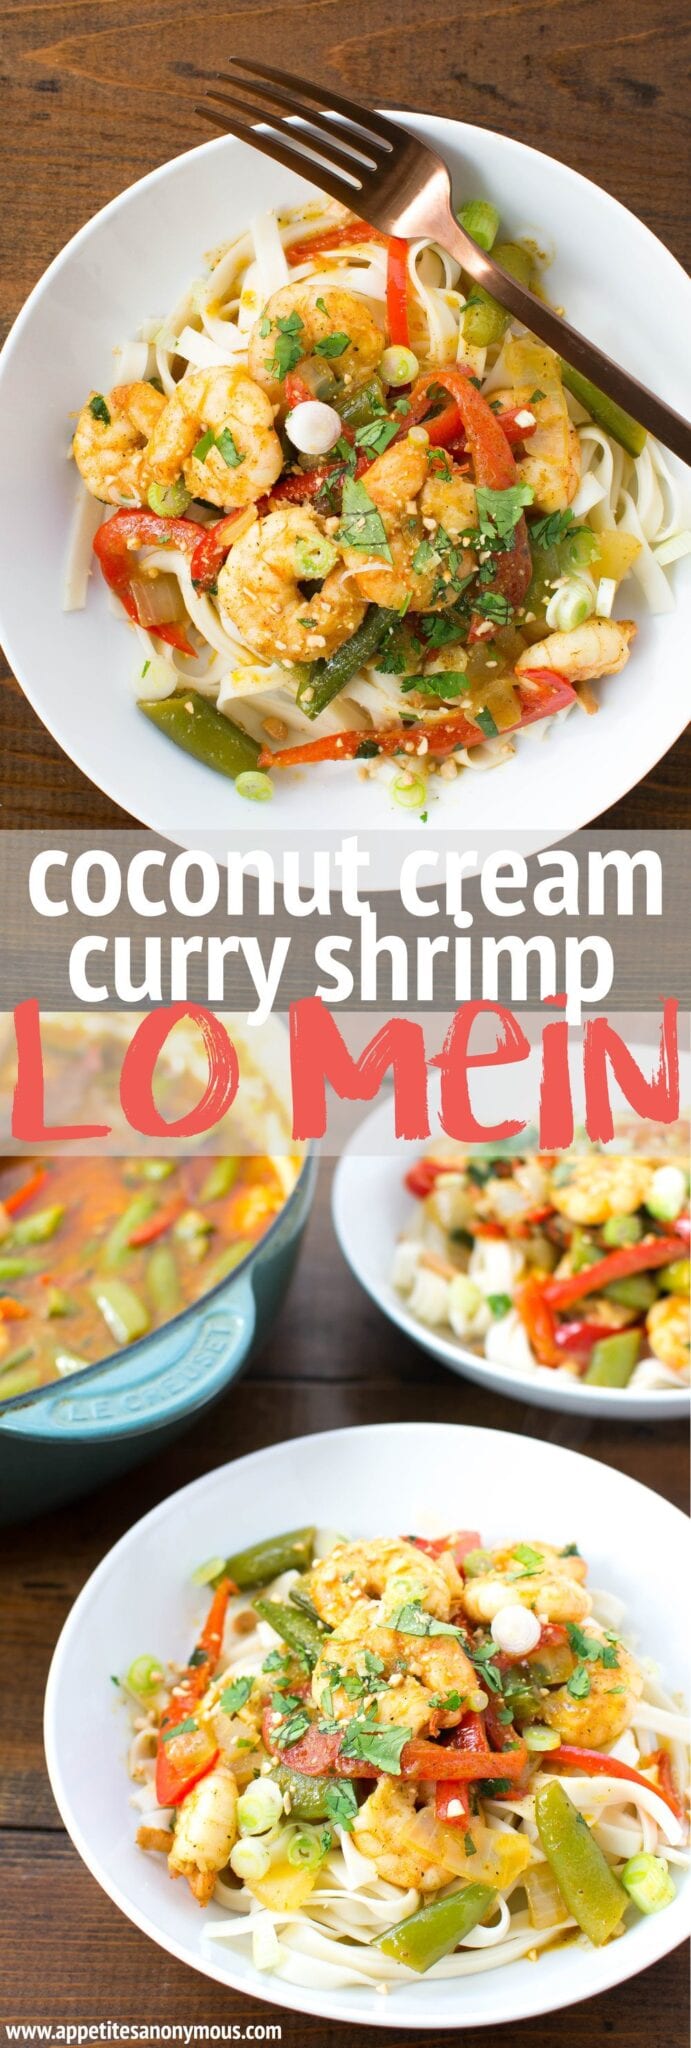 coconut cream curry shrimp lo mein - Appetites Anonymous